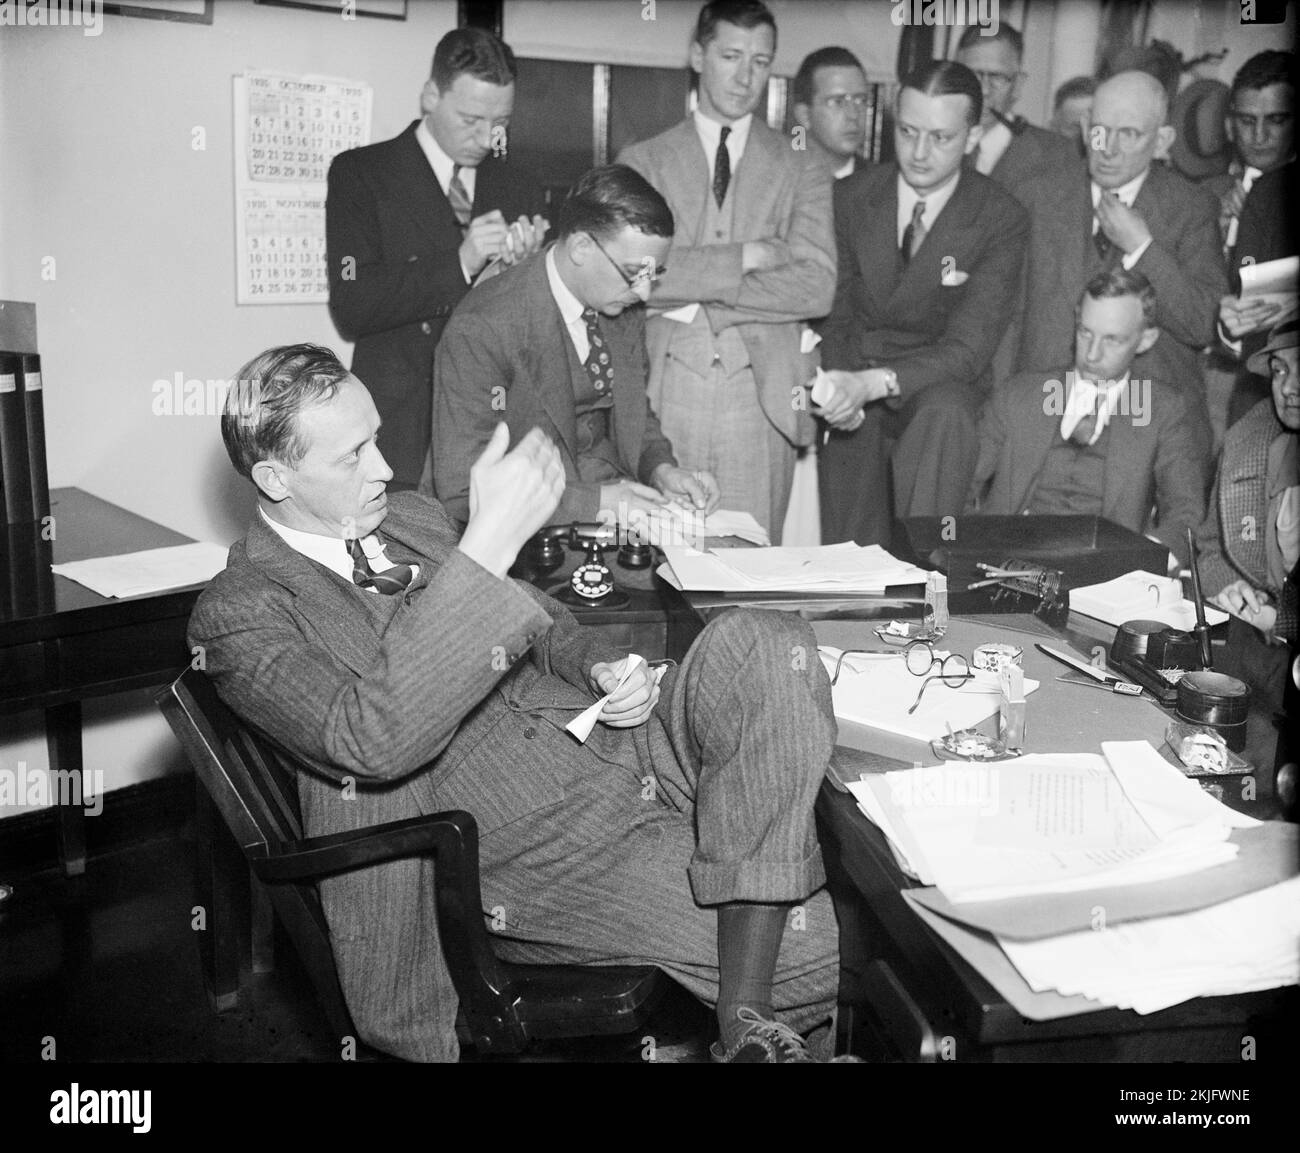 FERA administrator and WPA head Harry Hopkins speaking to reporters (November 1935) Stock Photo